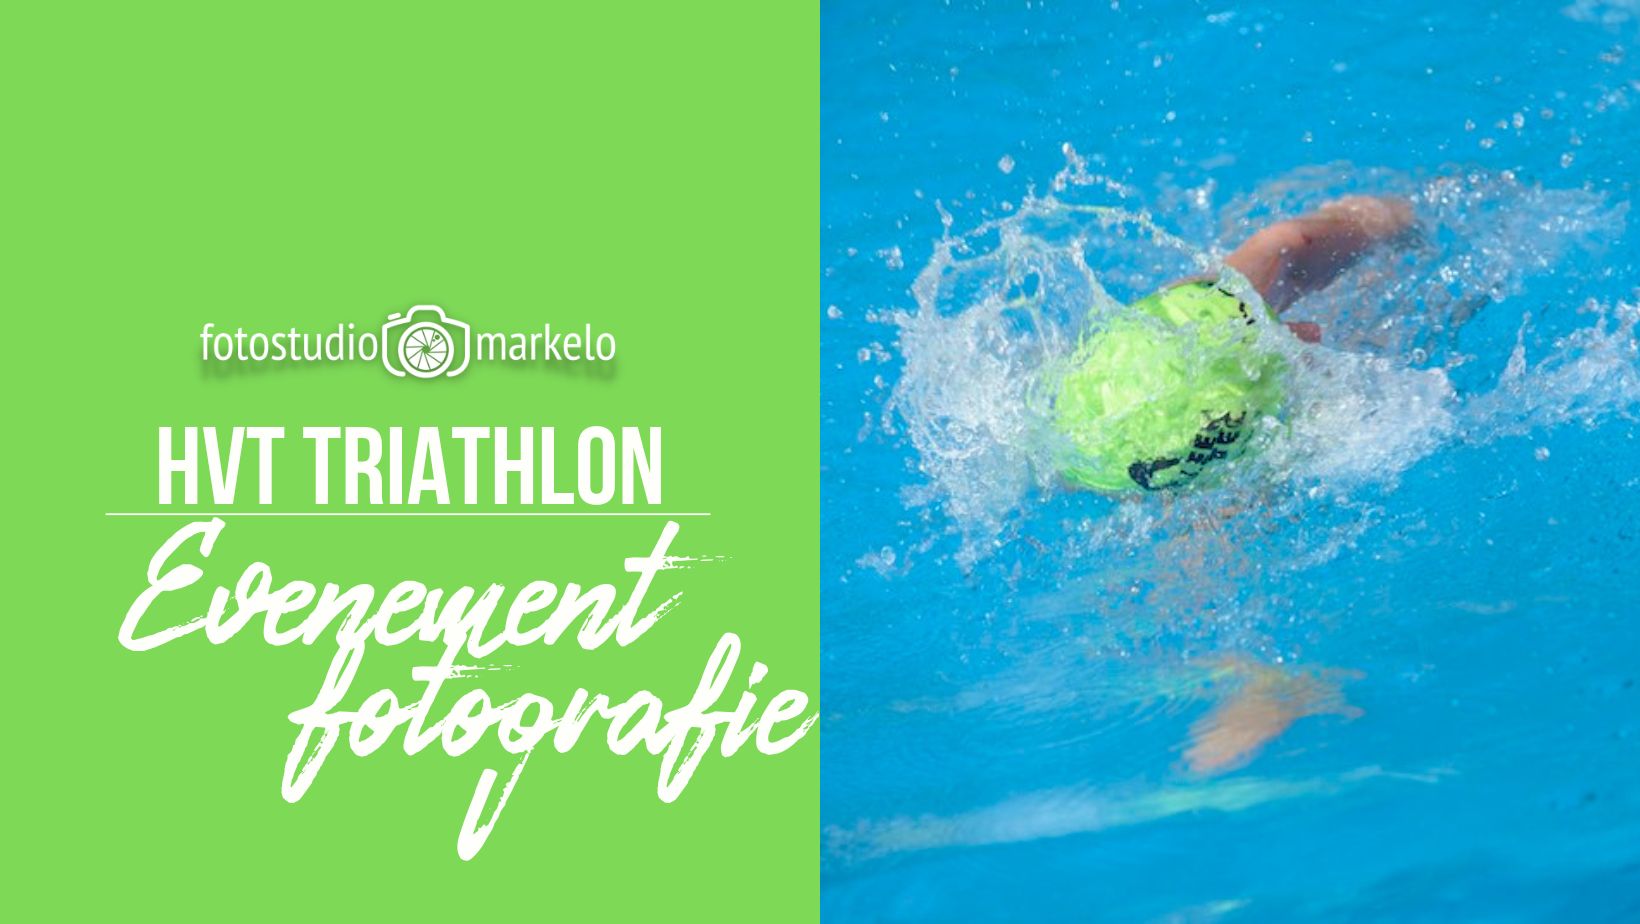 triathlon-hof-van-twente-fotostudio-markelo